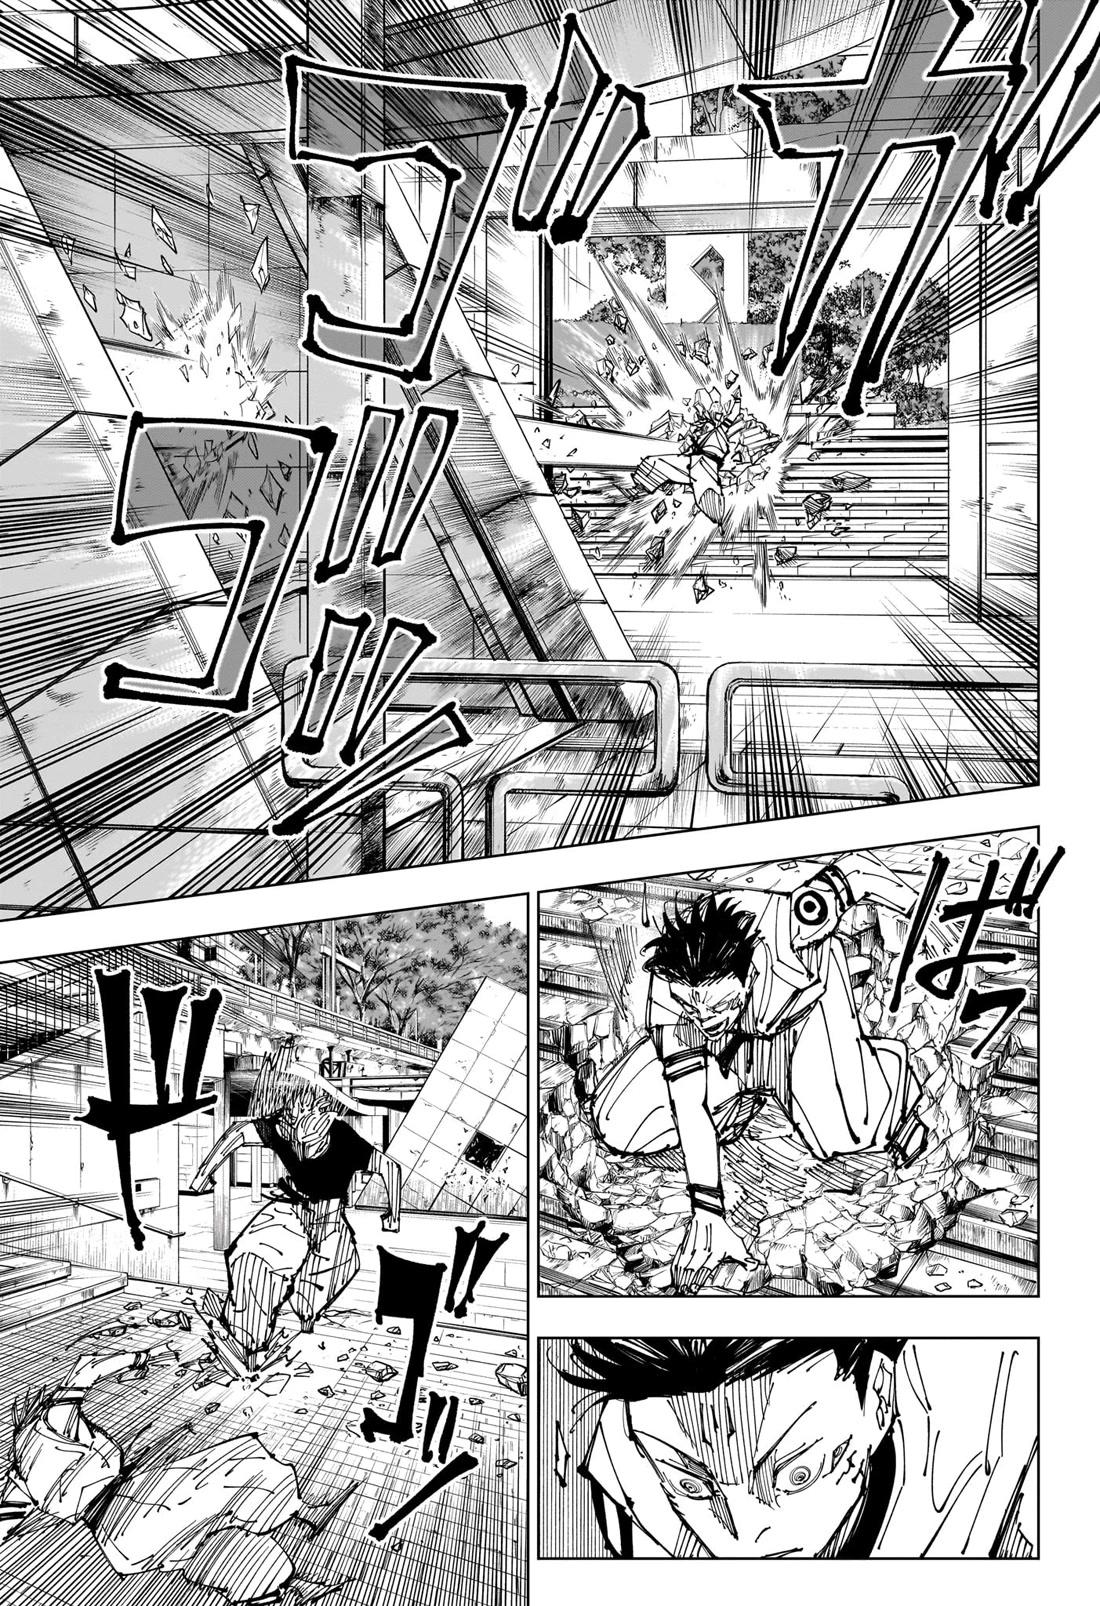 Jujutsu Kaisen Chapter 224: The Decisive Battle In The Uninhabited, Demon-Infested Shinjuku ② page 8 - Mangakakalot